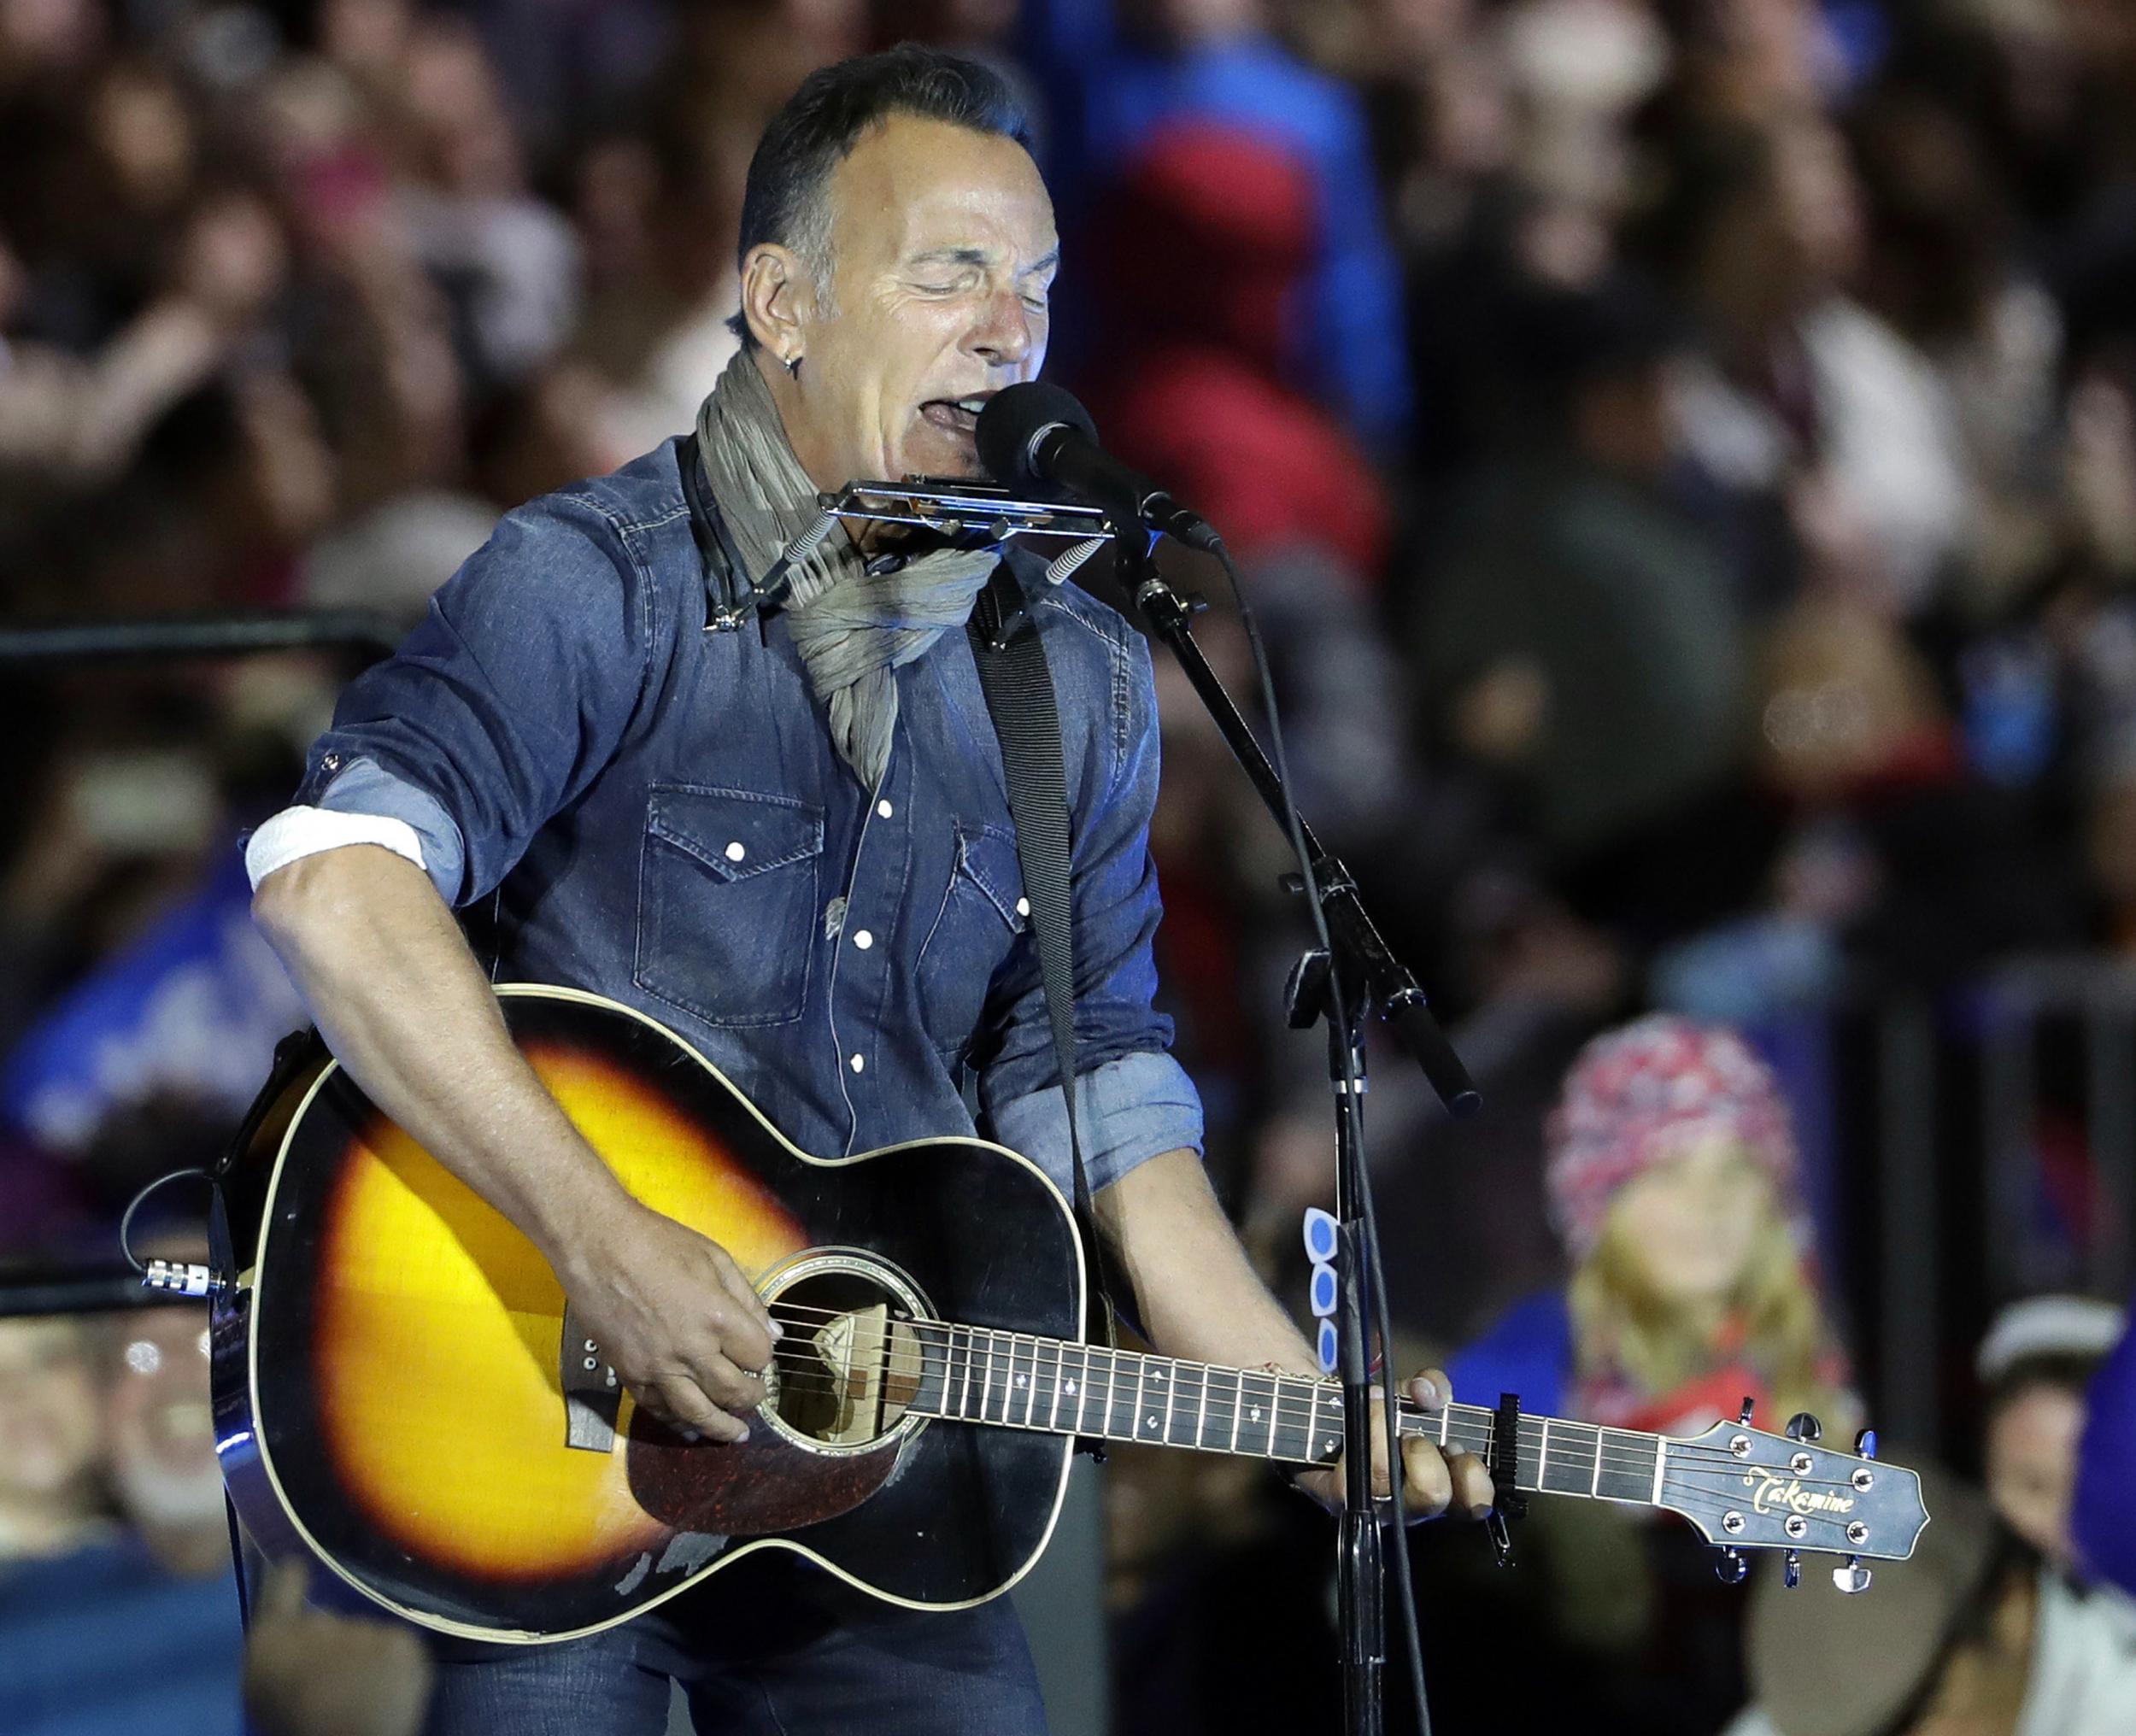 Both Bruce Springsteen and Jon Bon Jovi performed